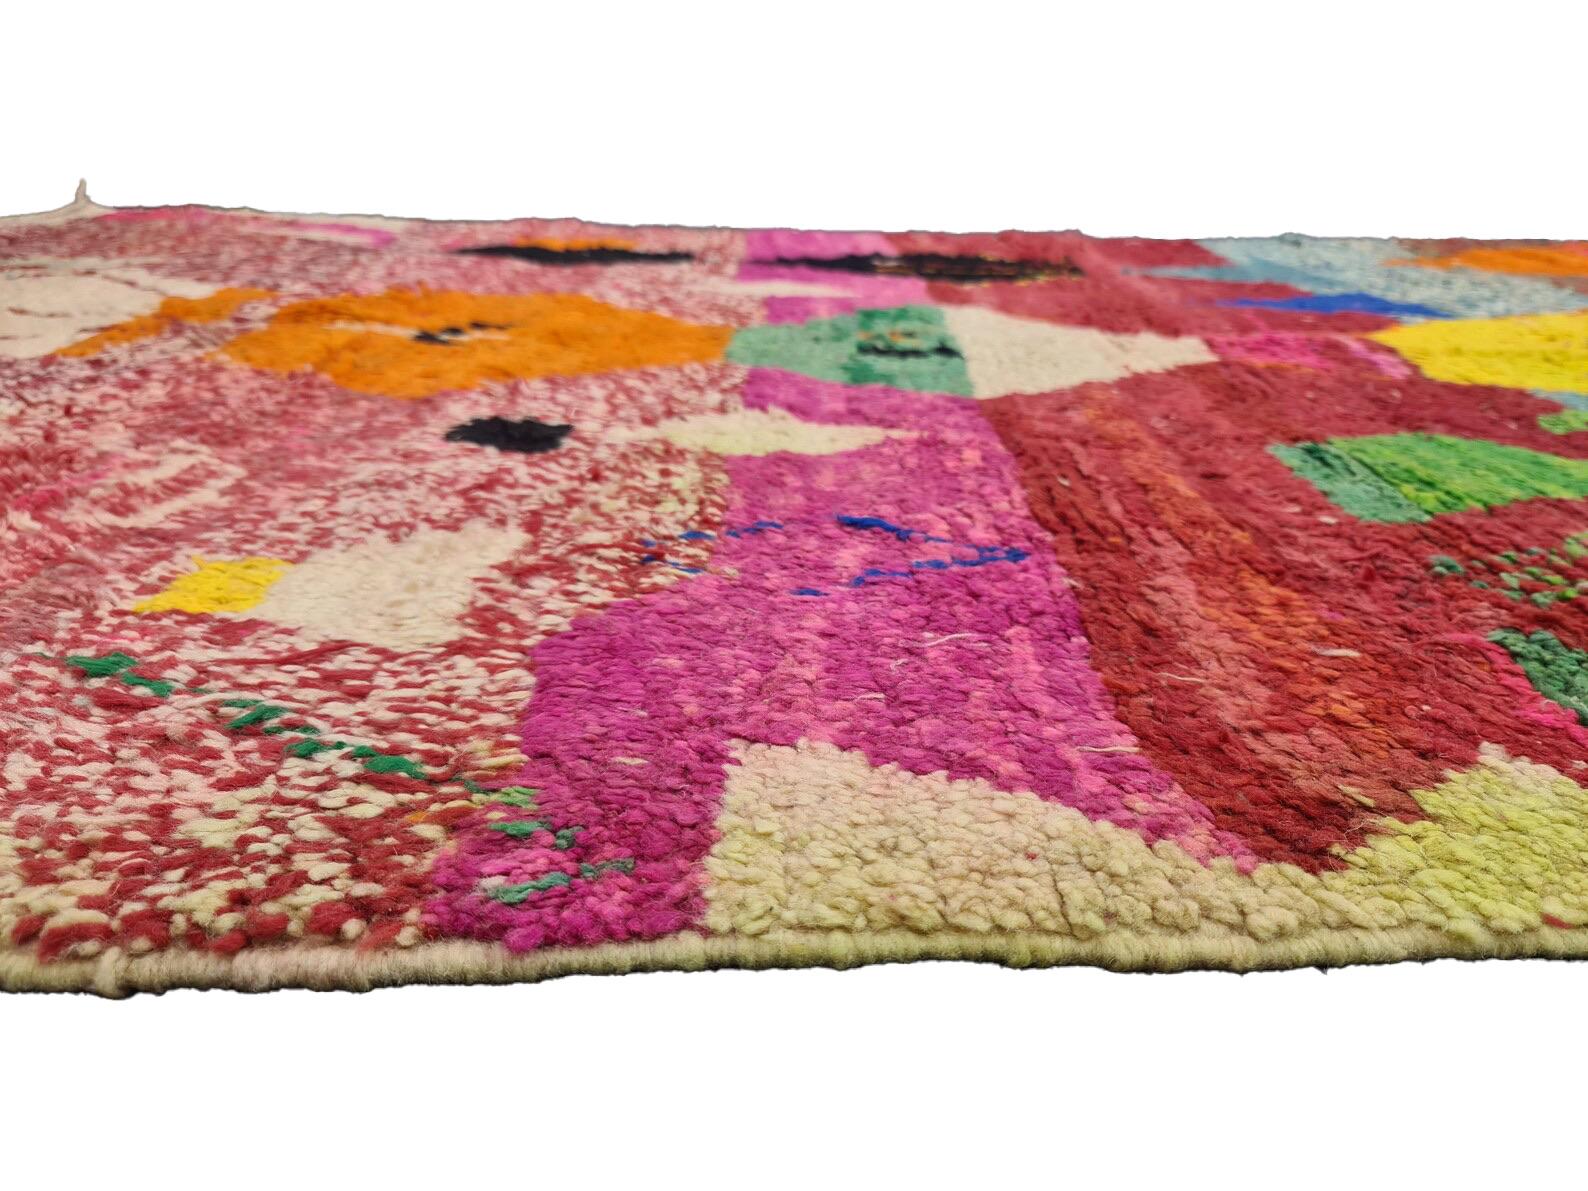 Wool Moroccan Boujaad Rug in Multi-colored Geometric Designs For Sale